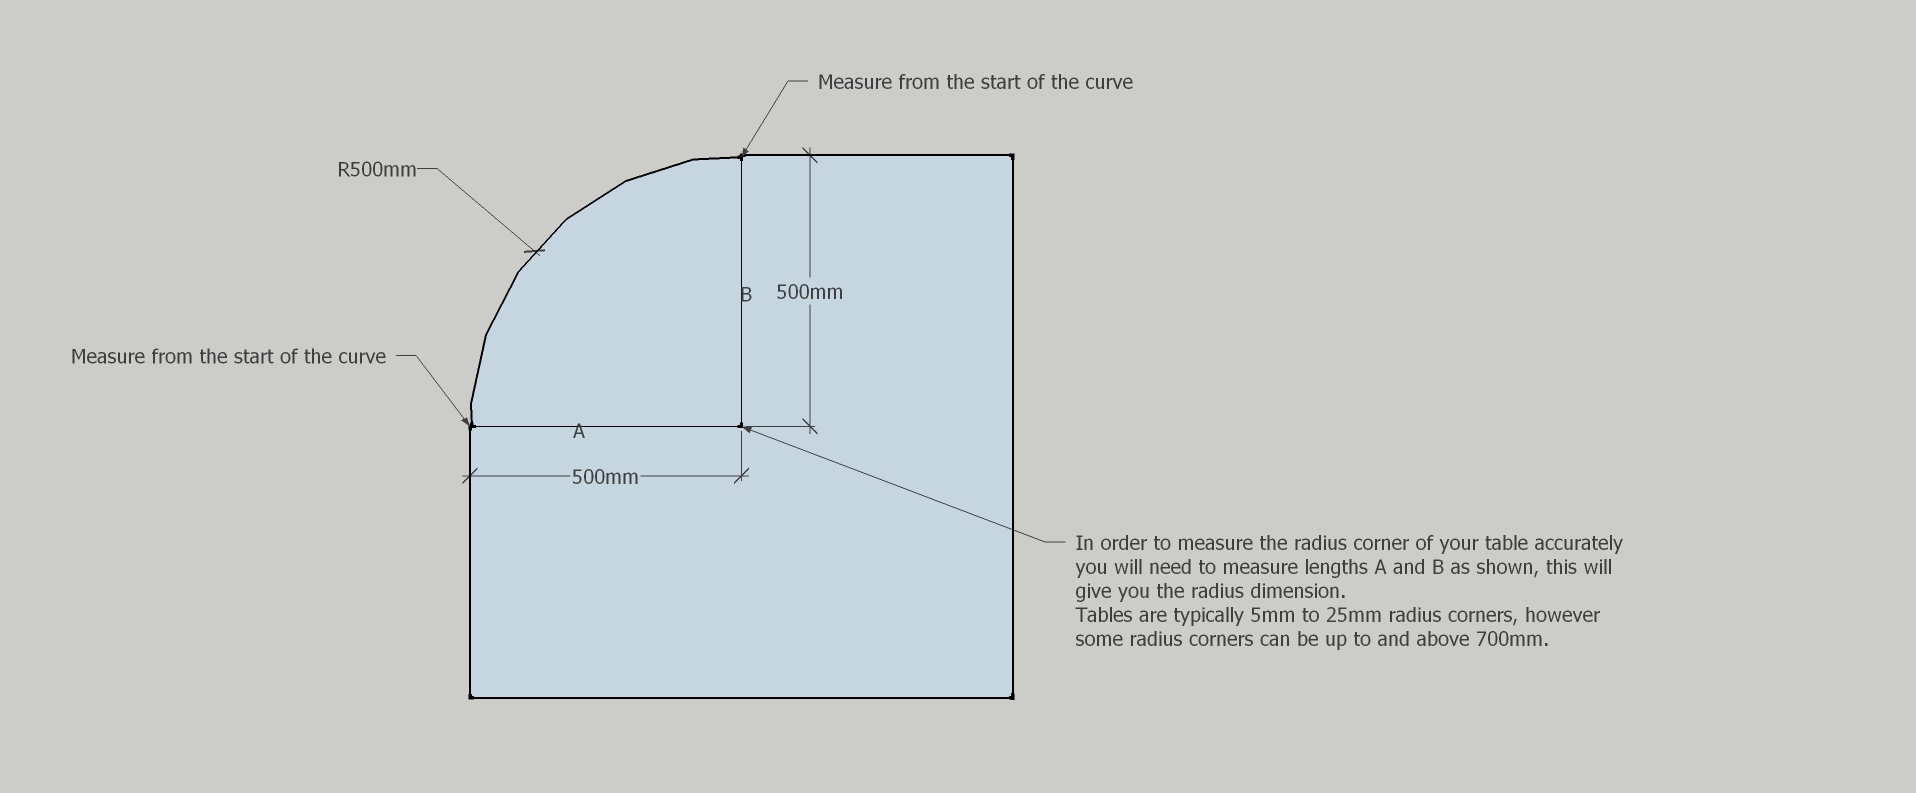 How-to-measure-a-radius-corner-1.jpg